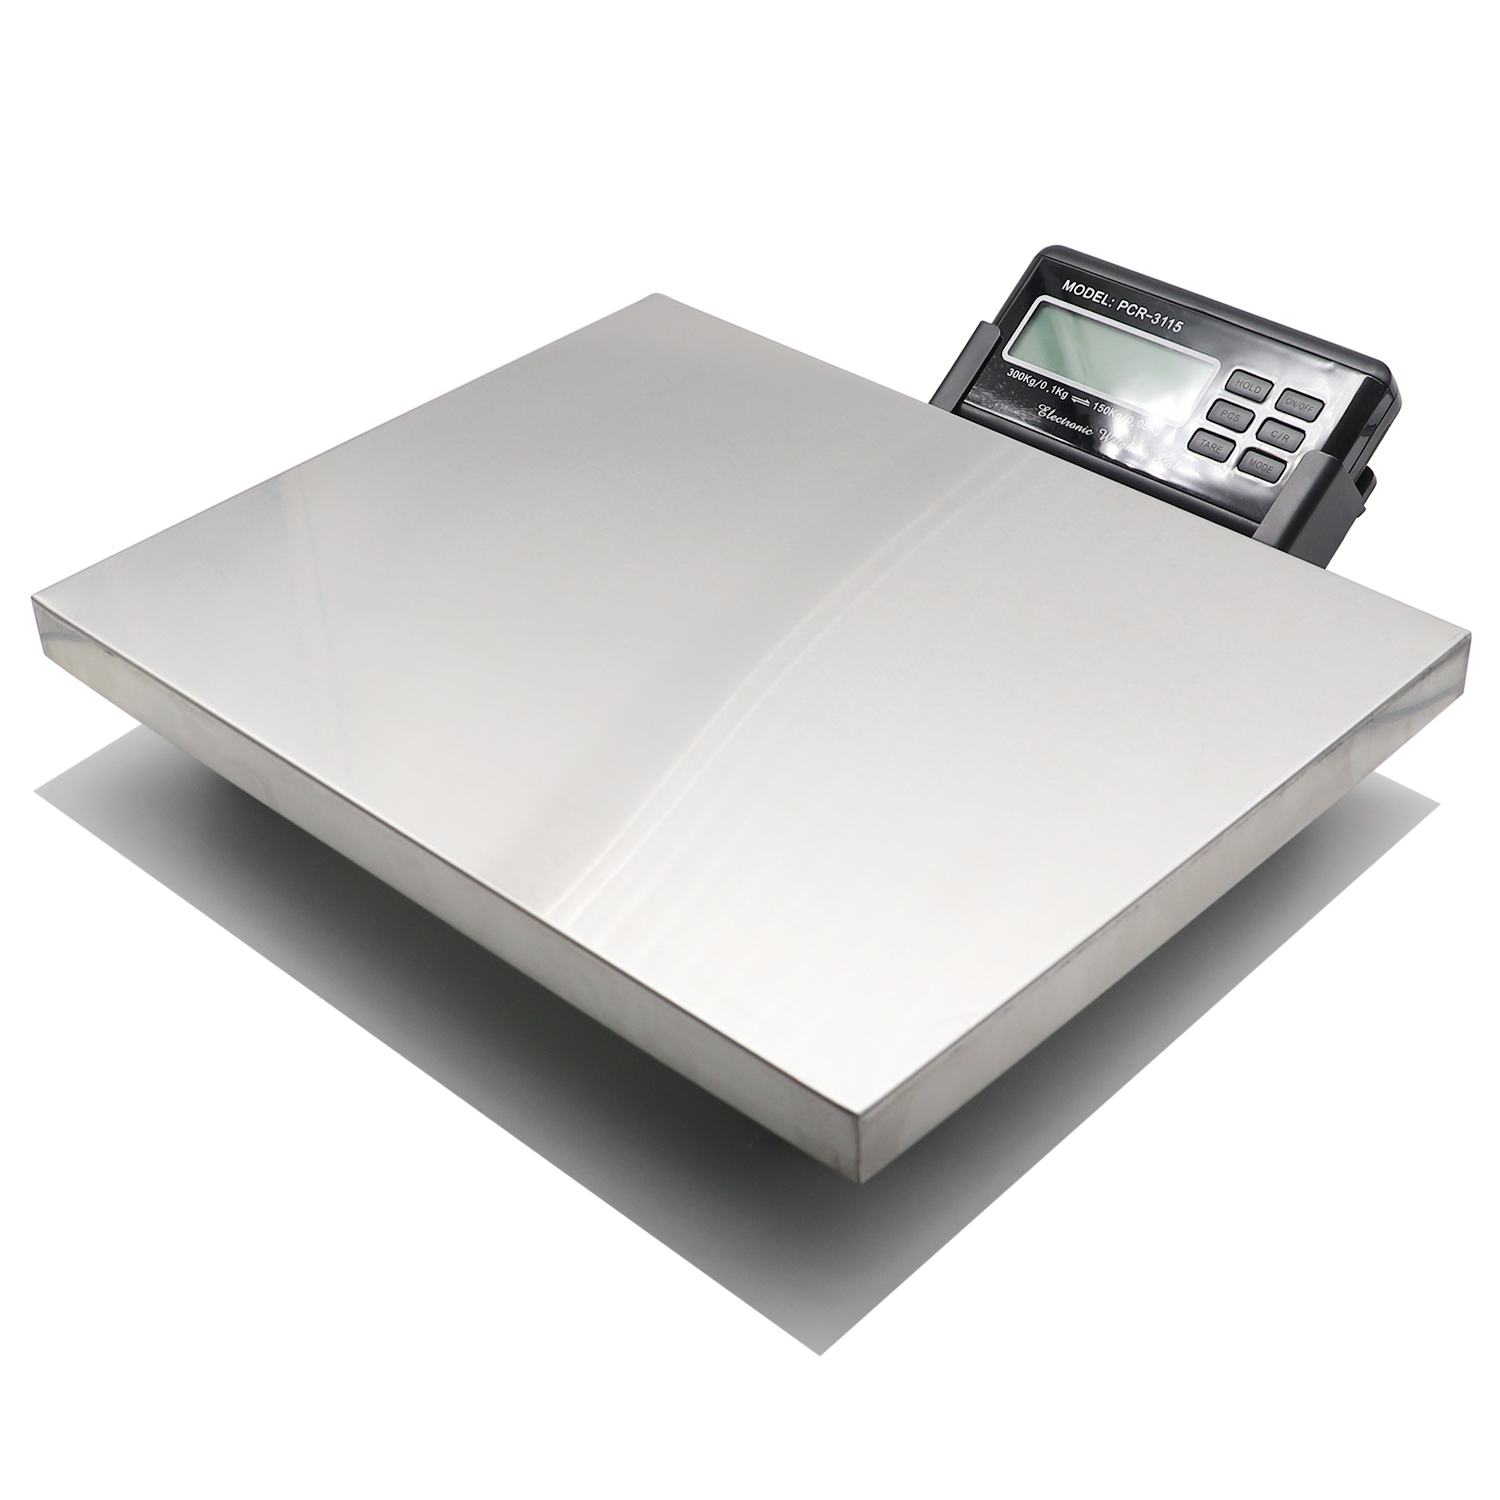 New Balance Digital Weighting Machine with POS Interface Price Computing Scale